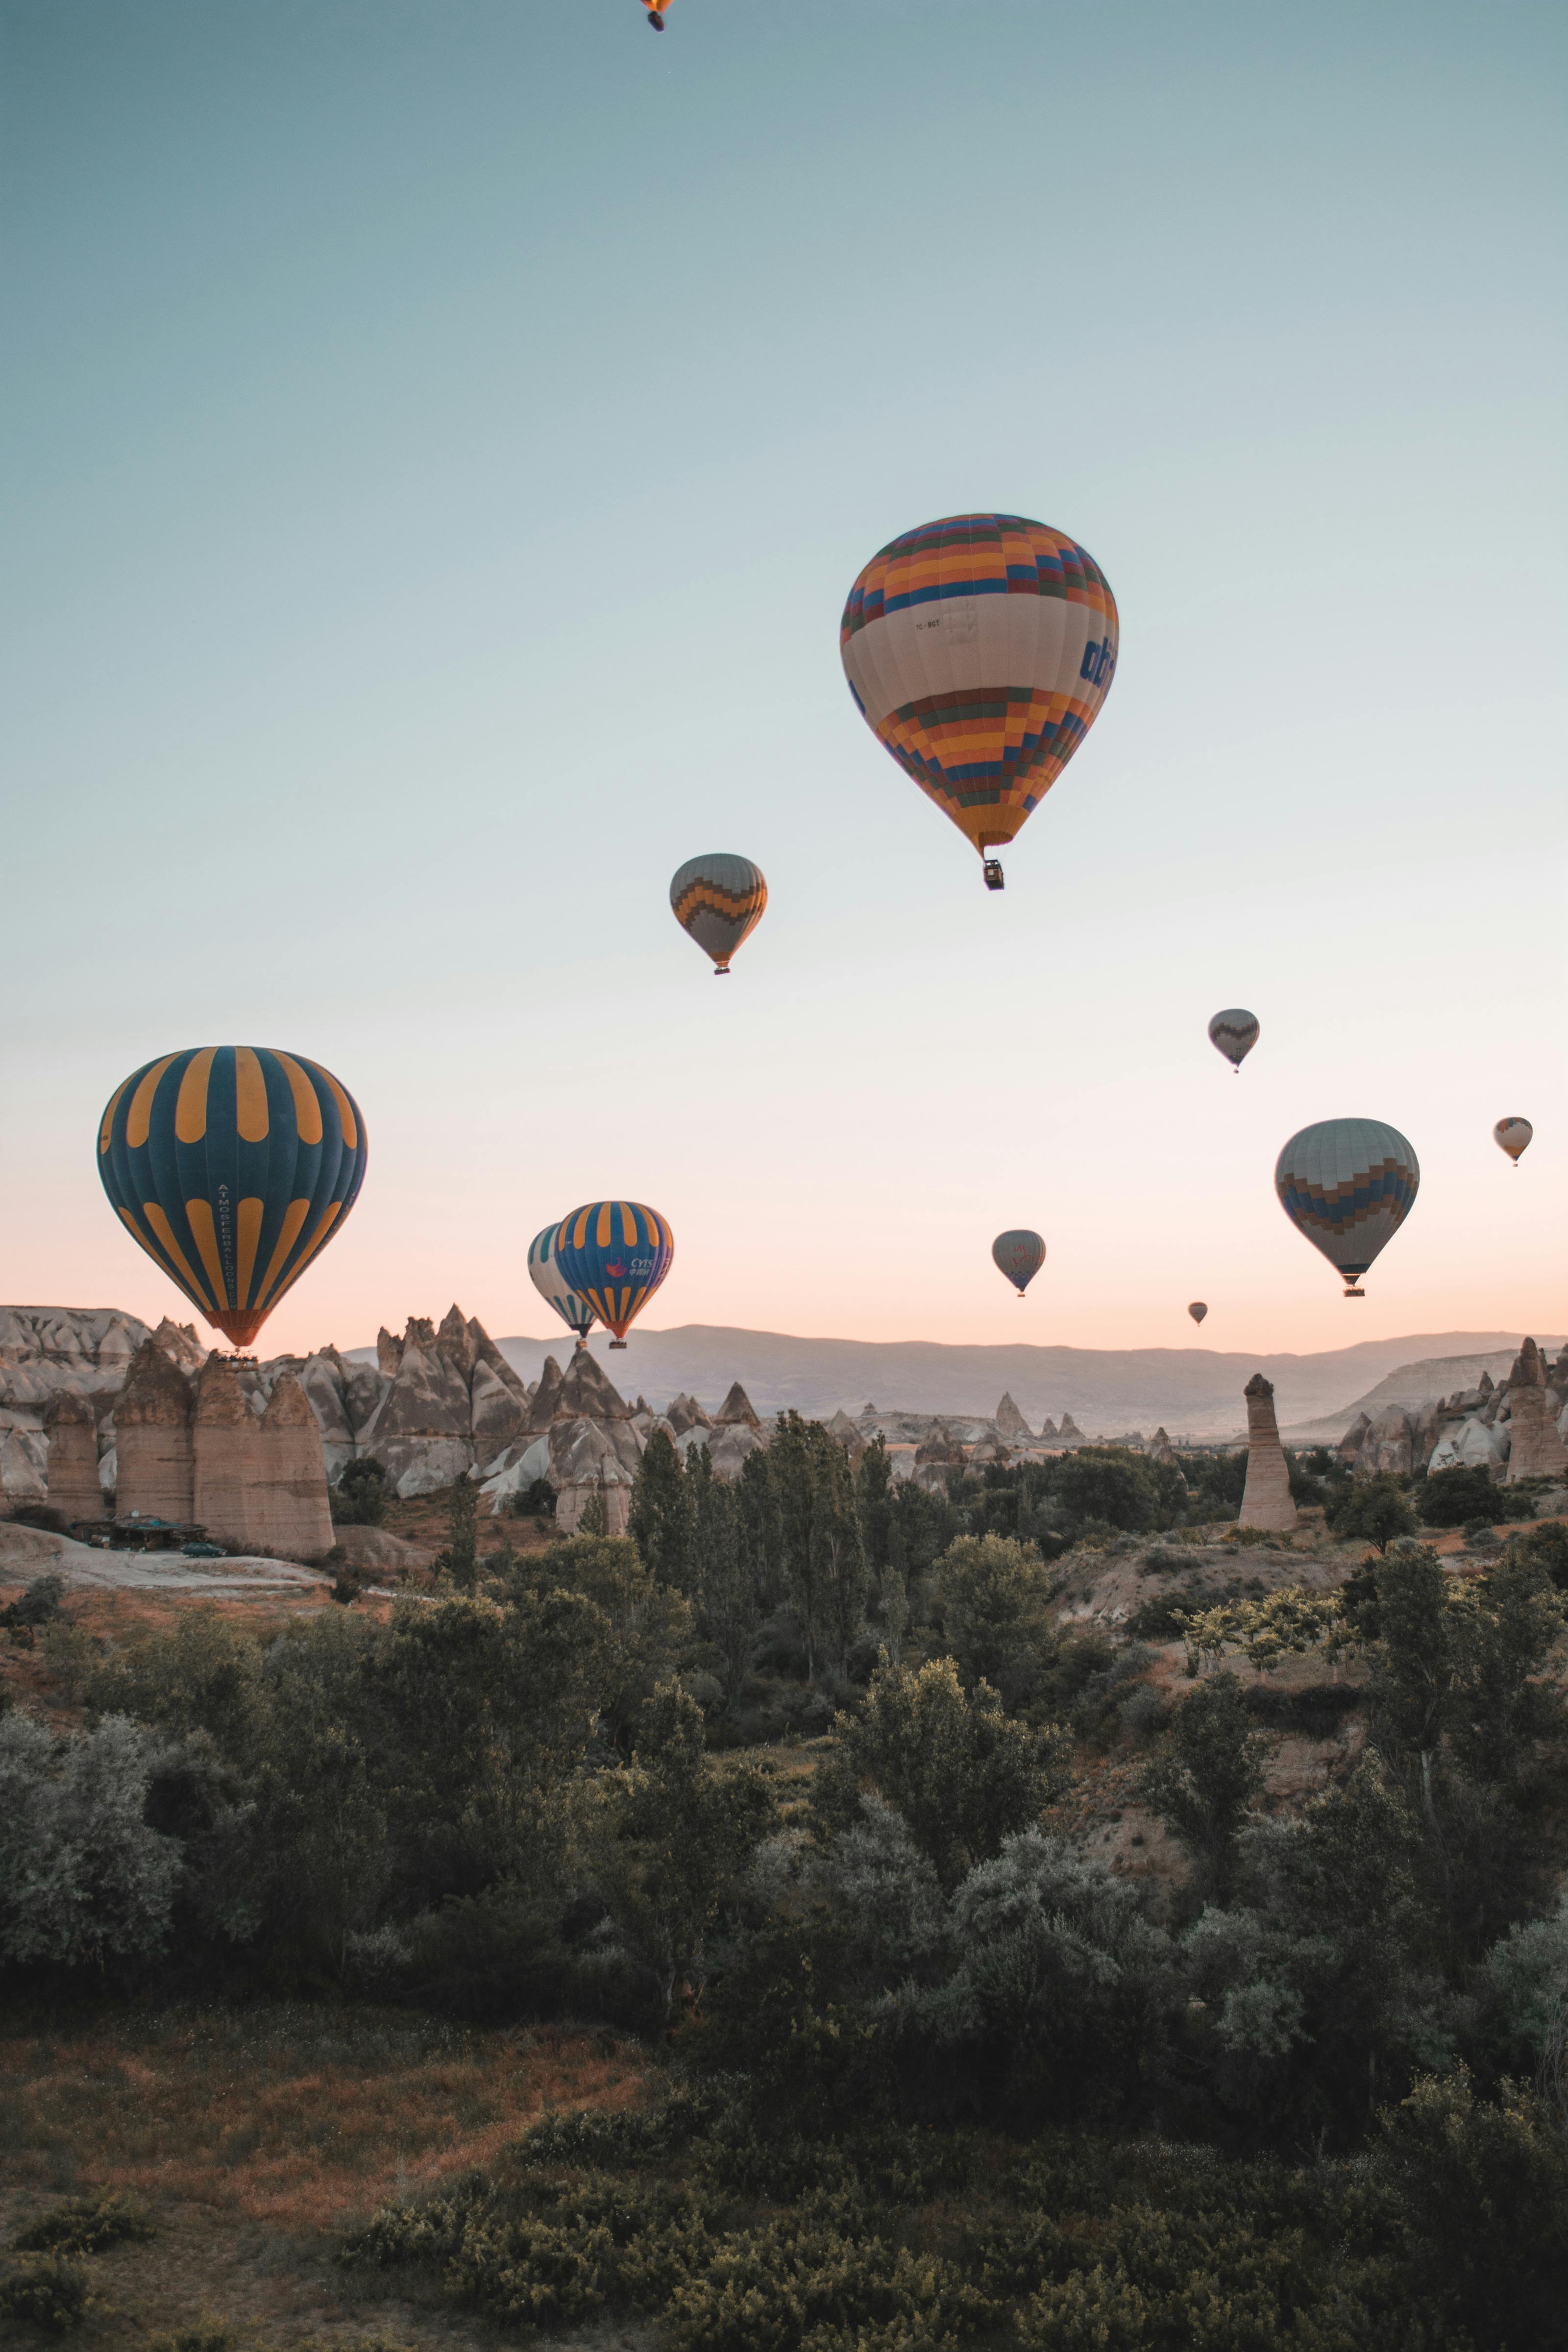 File:Hot-air ballooning in Cappadocia (52397723689).jpg - Wikimedia Commons